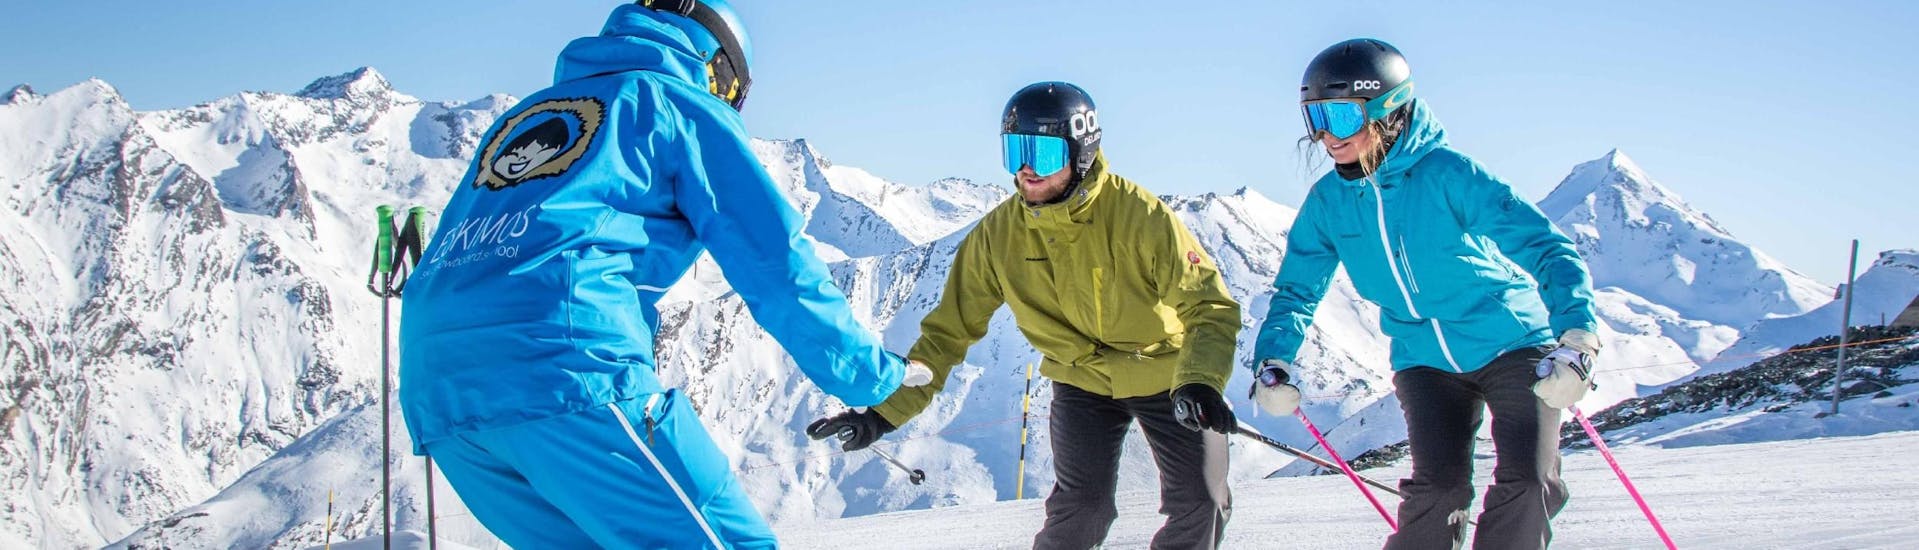 Skilessen voor volwassenen voor alle niveaus met Ski School ESKIMOS Saas-Fee.